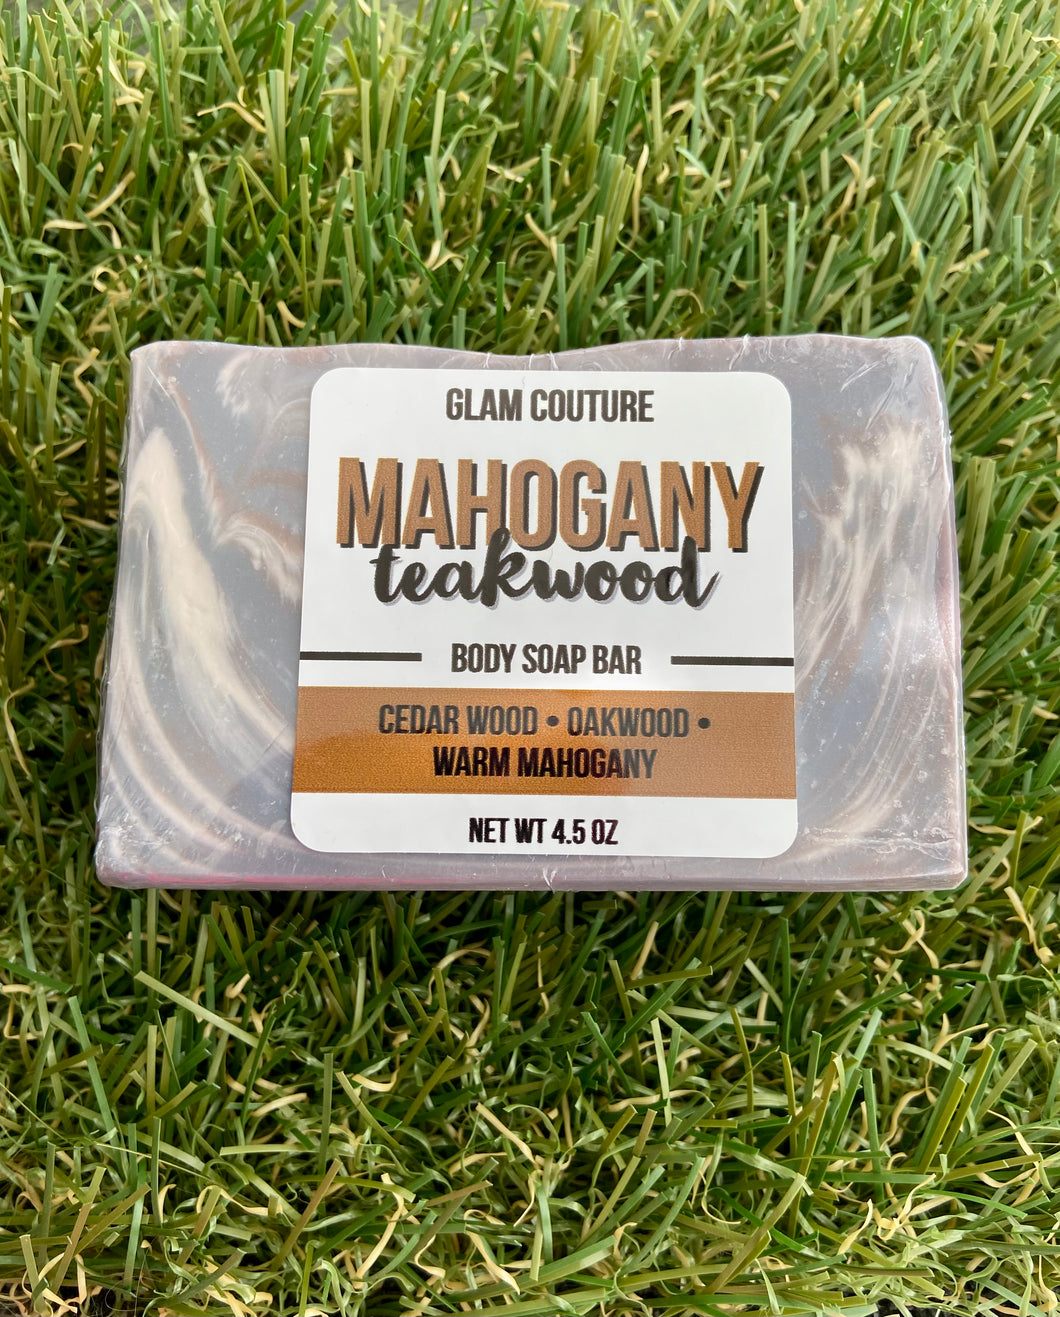 Glam Couture Body Care™ - “Mahogany Teakwood” Handmade Soap